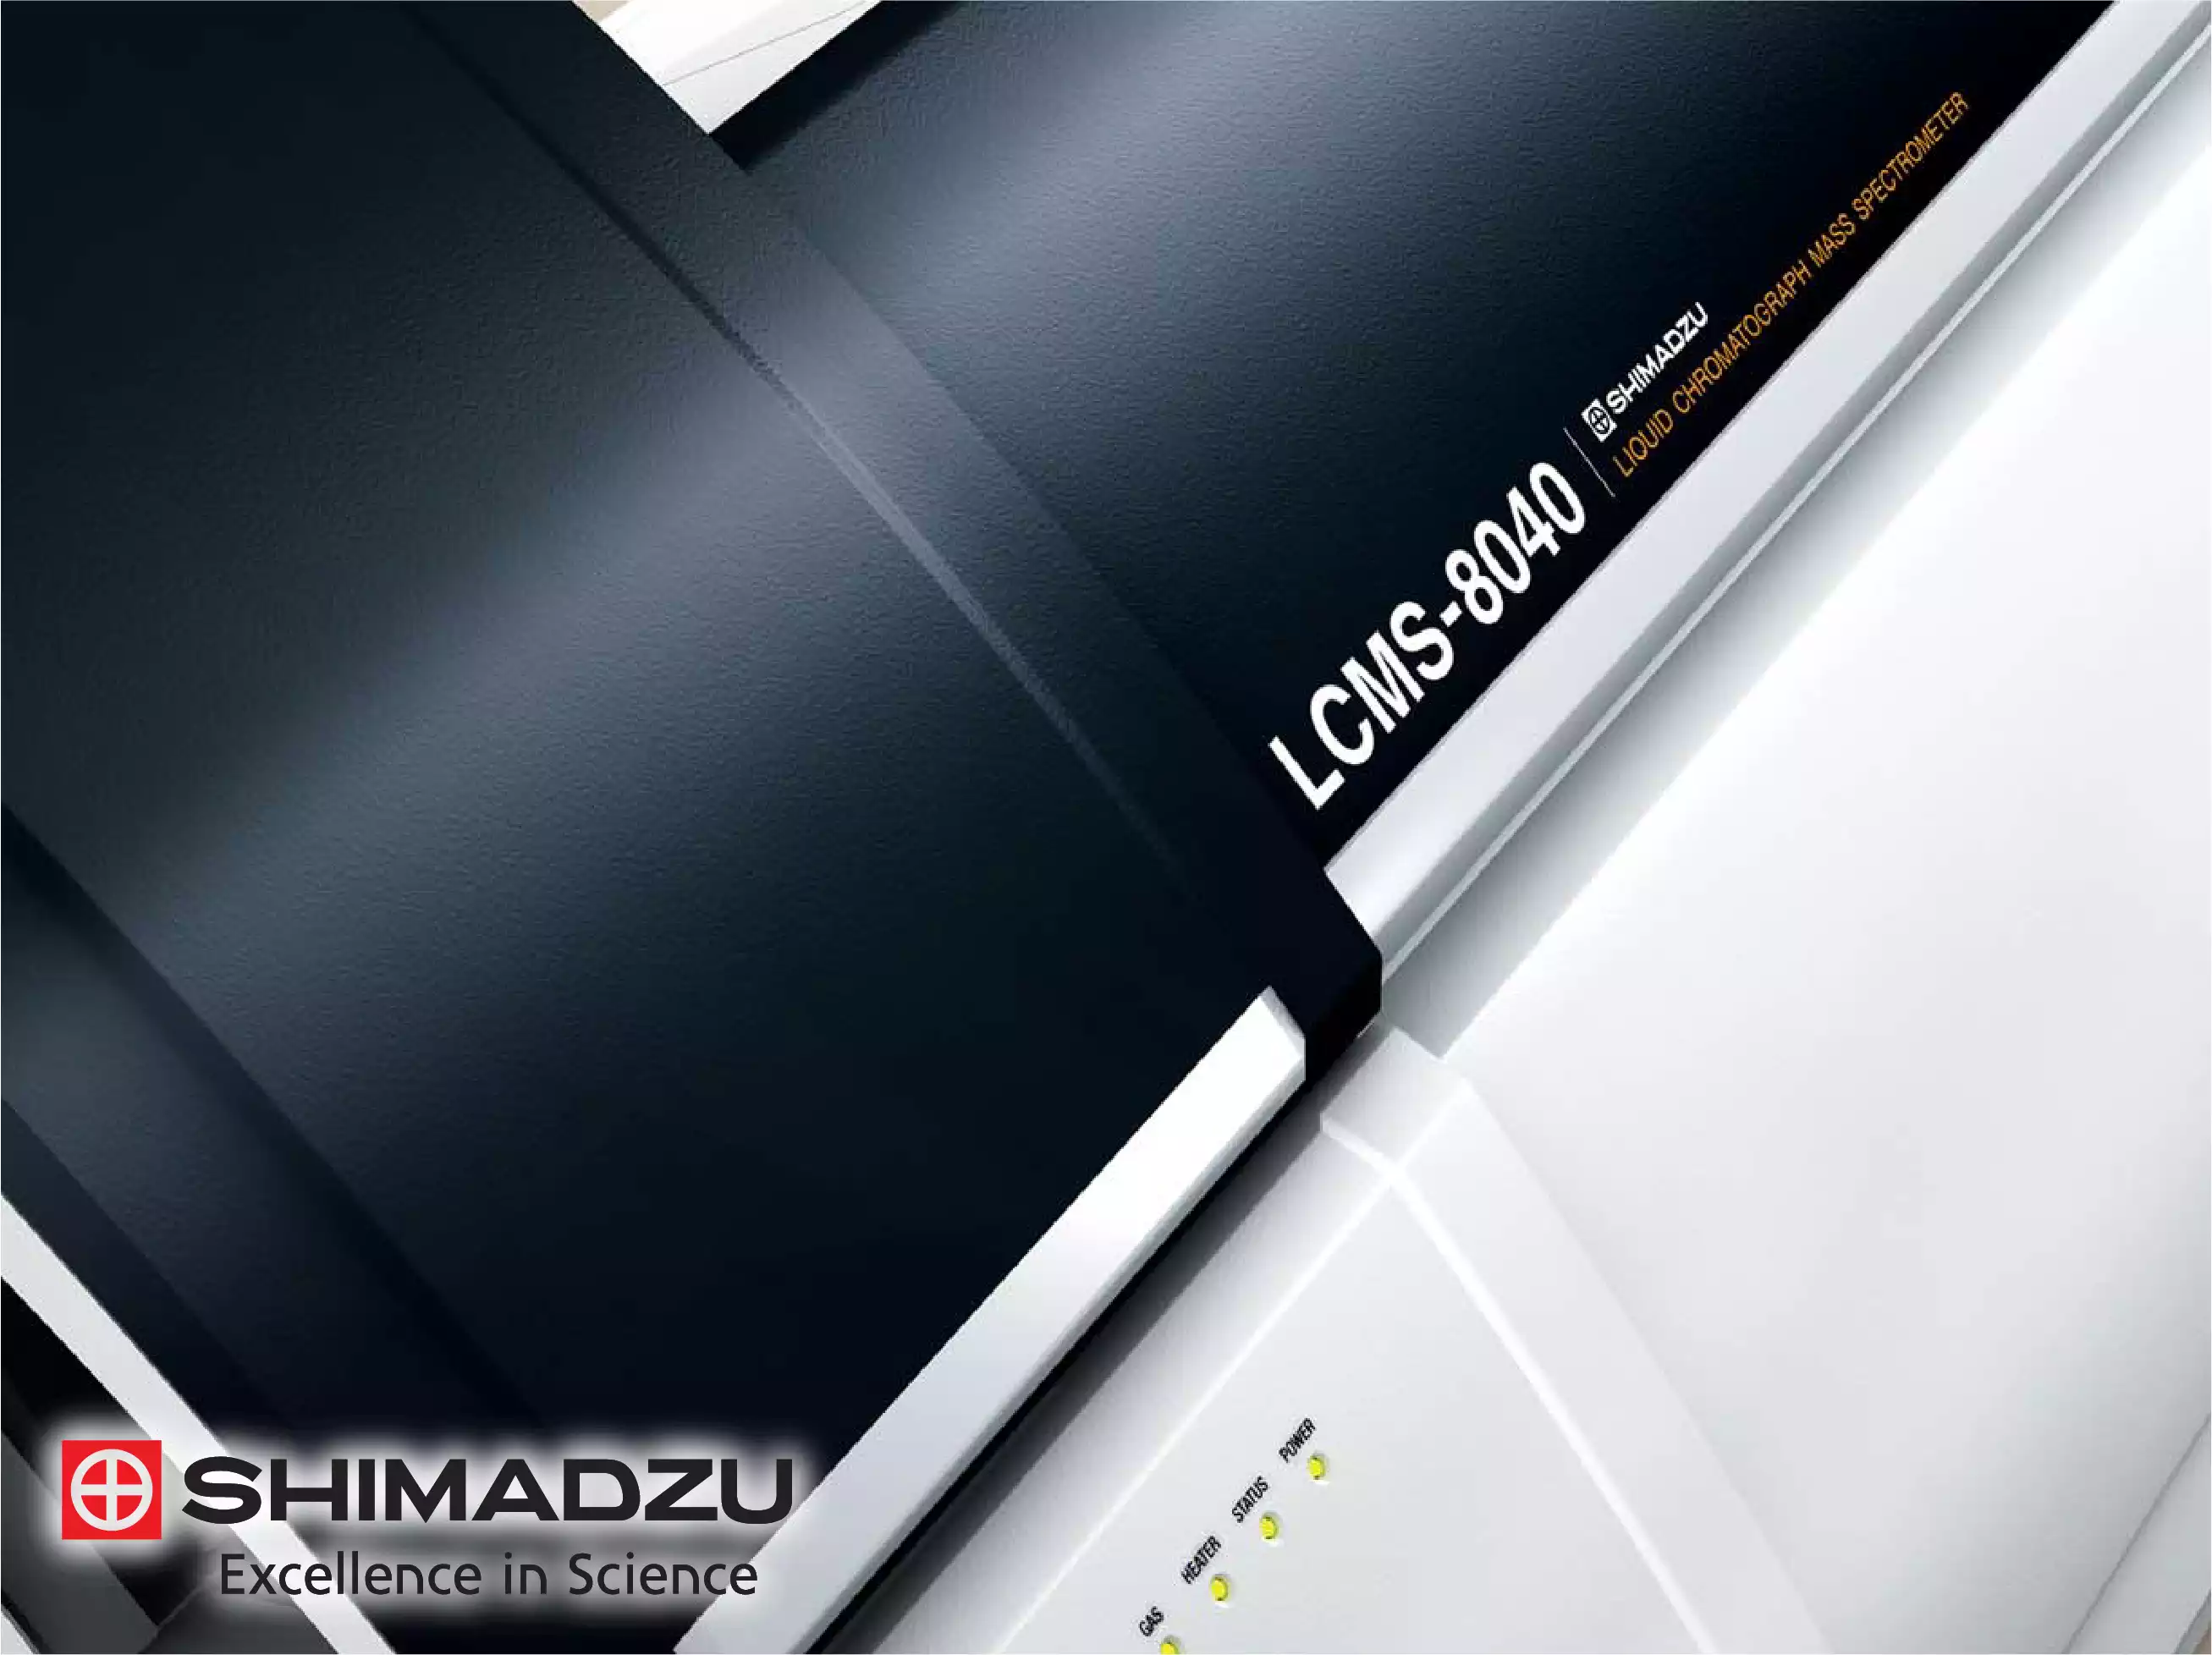 Shimadzu LCMS-8040 Triple Quadrupole LC-MS/MS